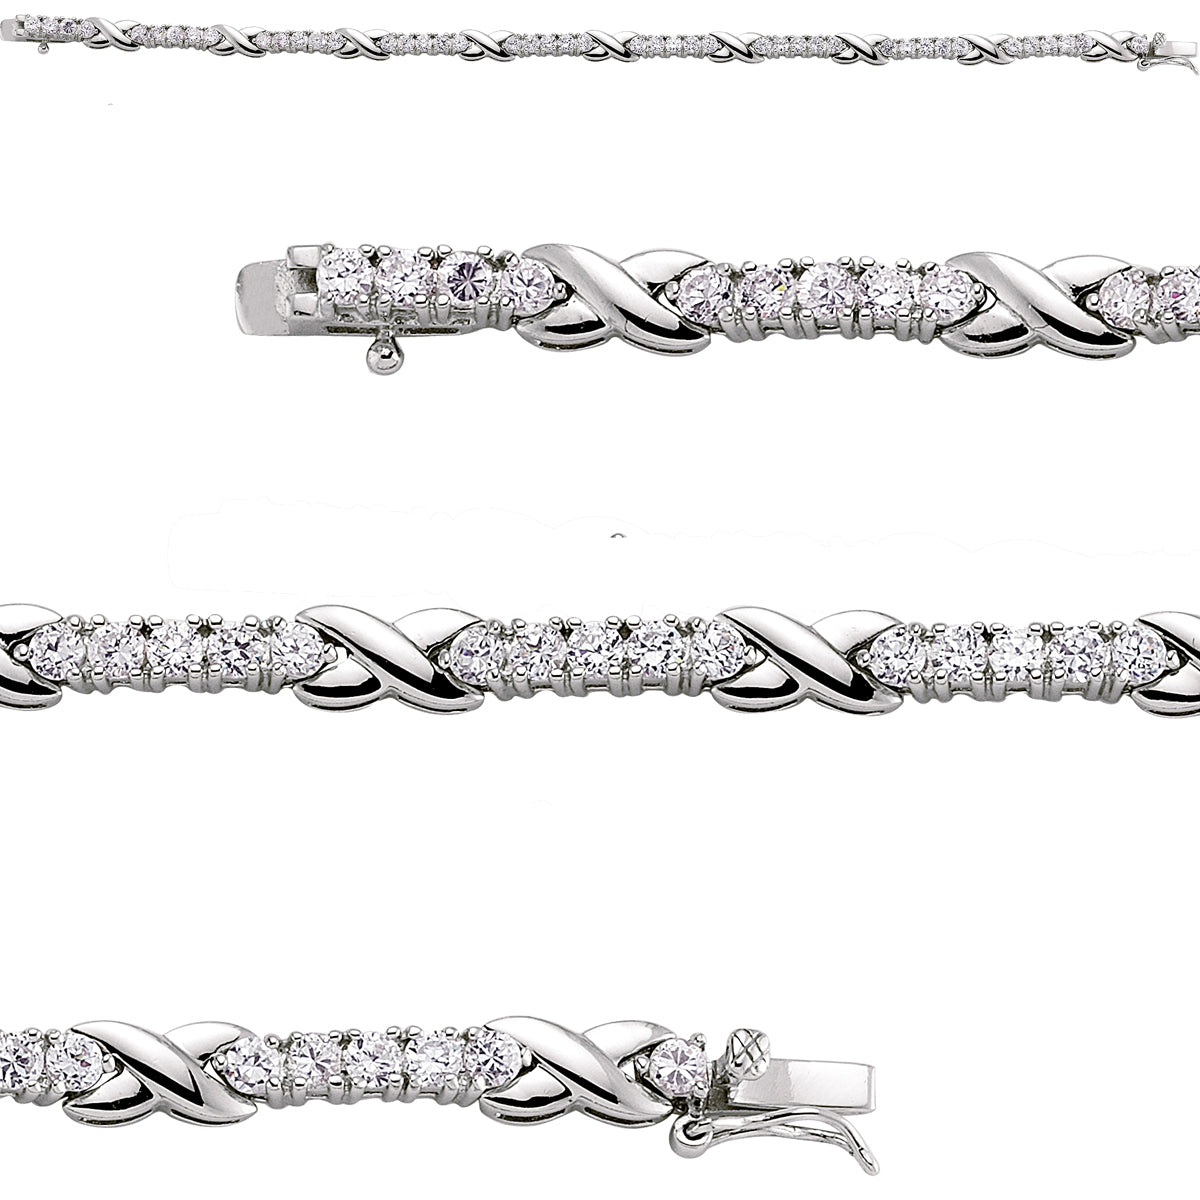 Silver  CZ Infinity Kisses Tennis Bracelet 5mm 7.5 inch - GVB088